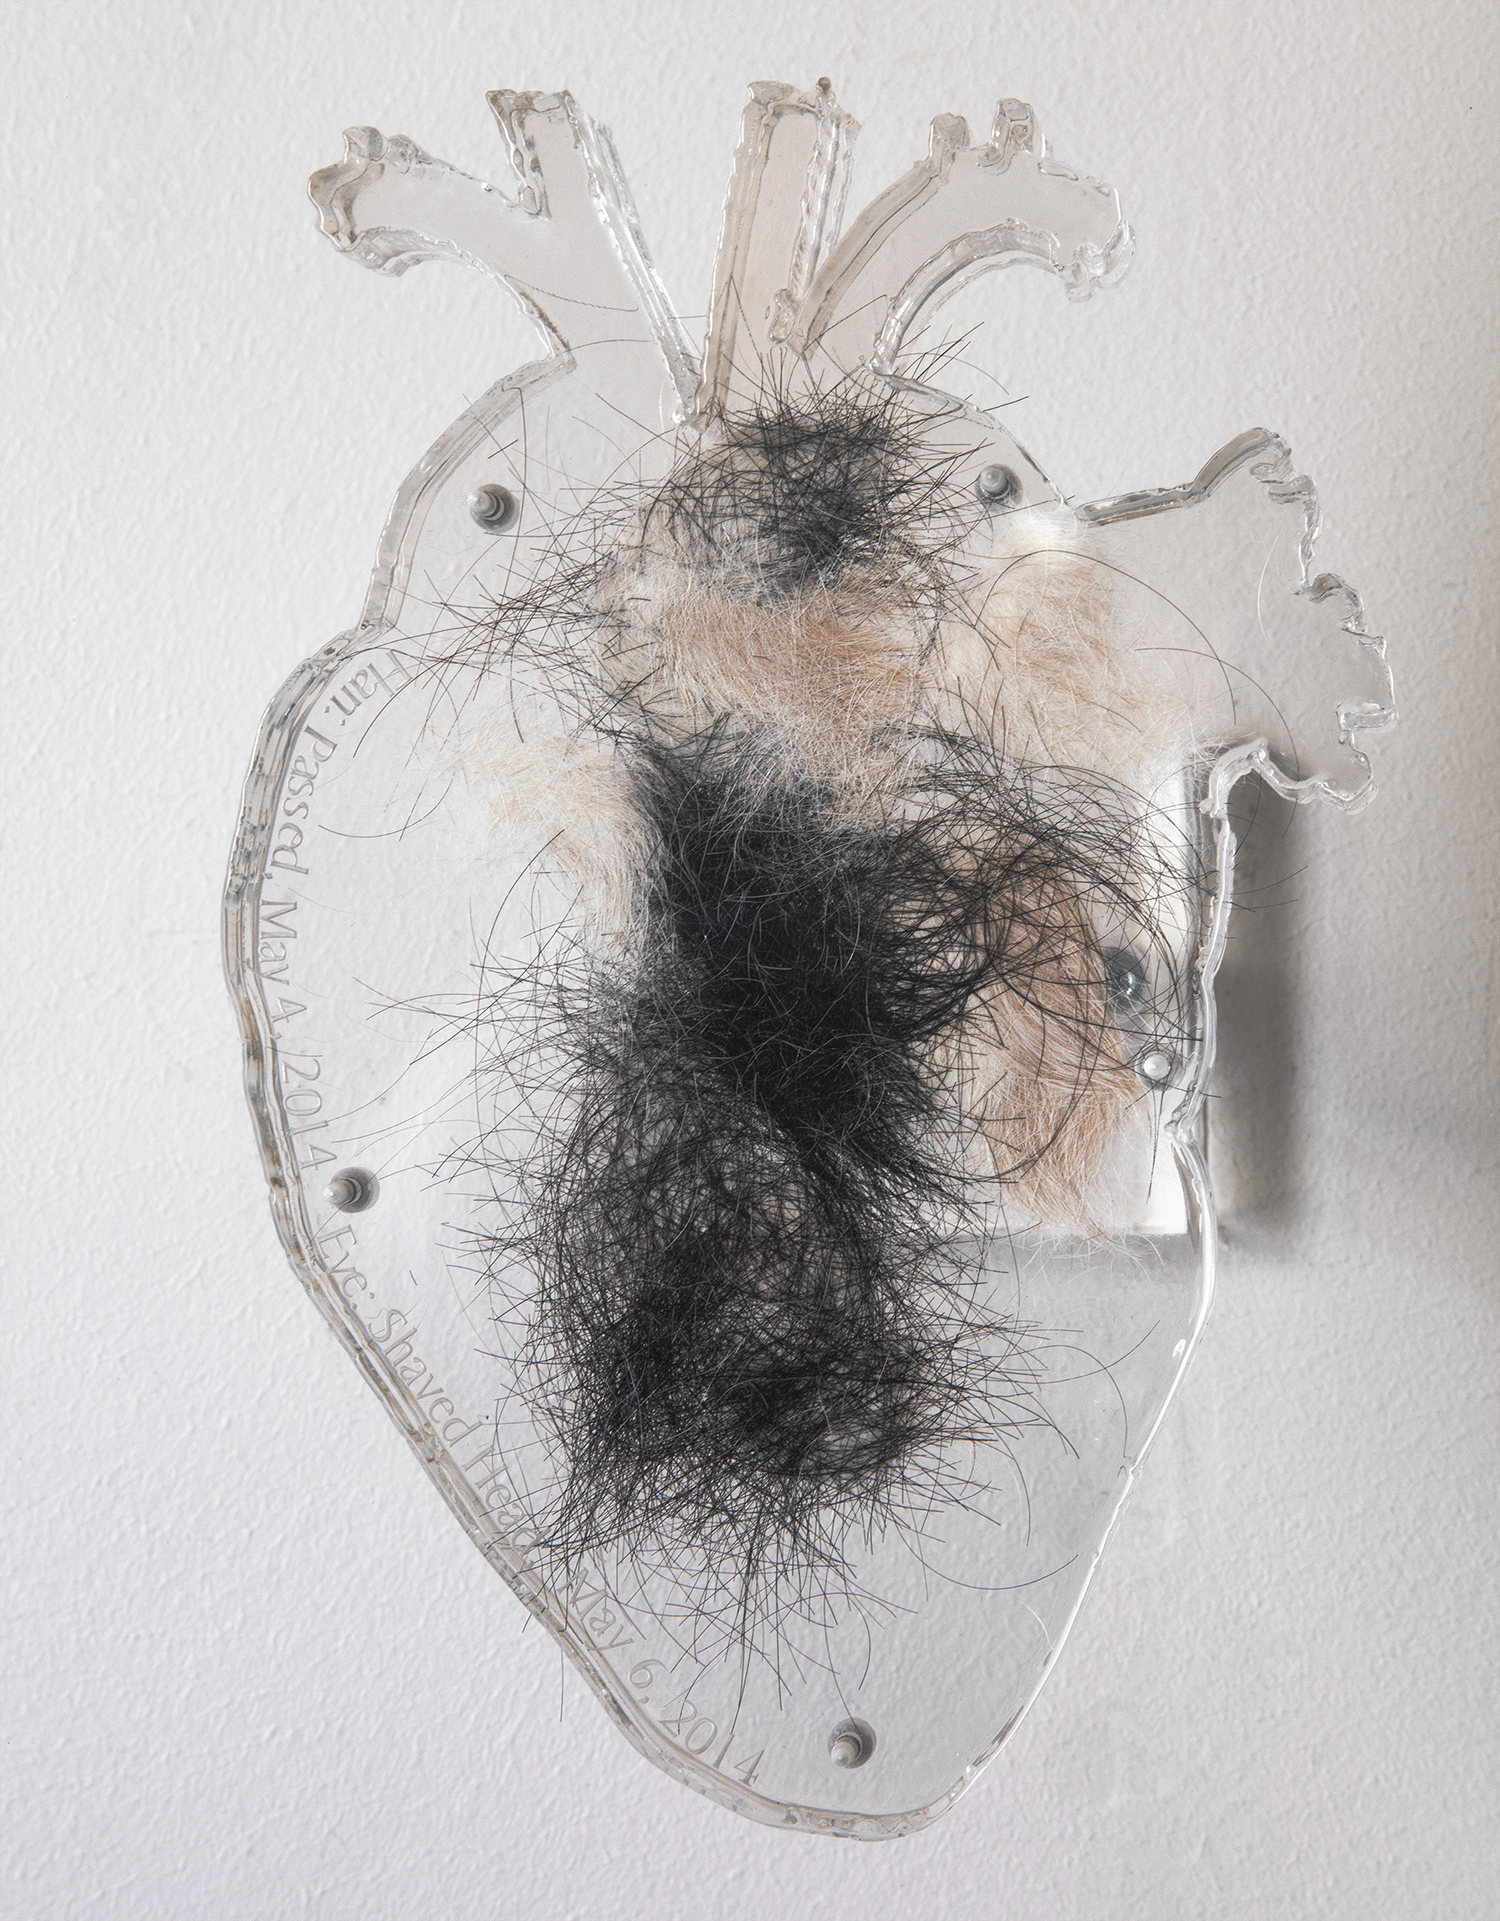   Eve Wood  Final Translation  2014 Acrylic, dog hair, human hair 8 x 6 x 9 Inches   Courtesy of the Artist  